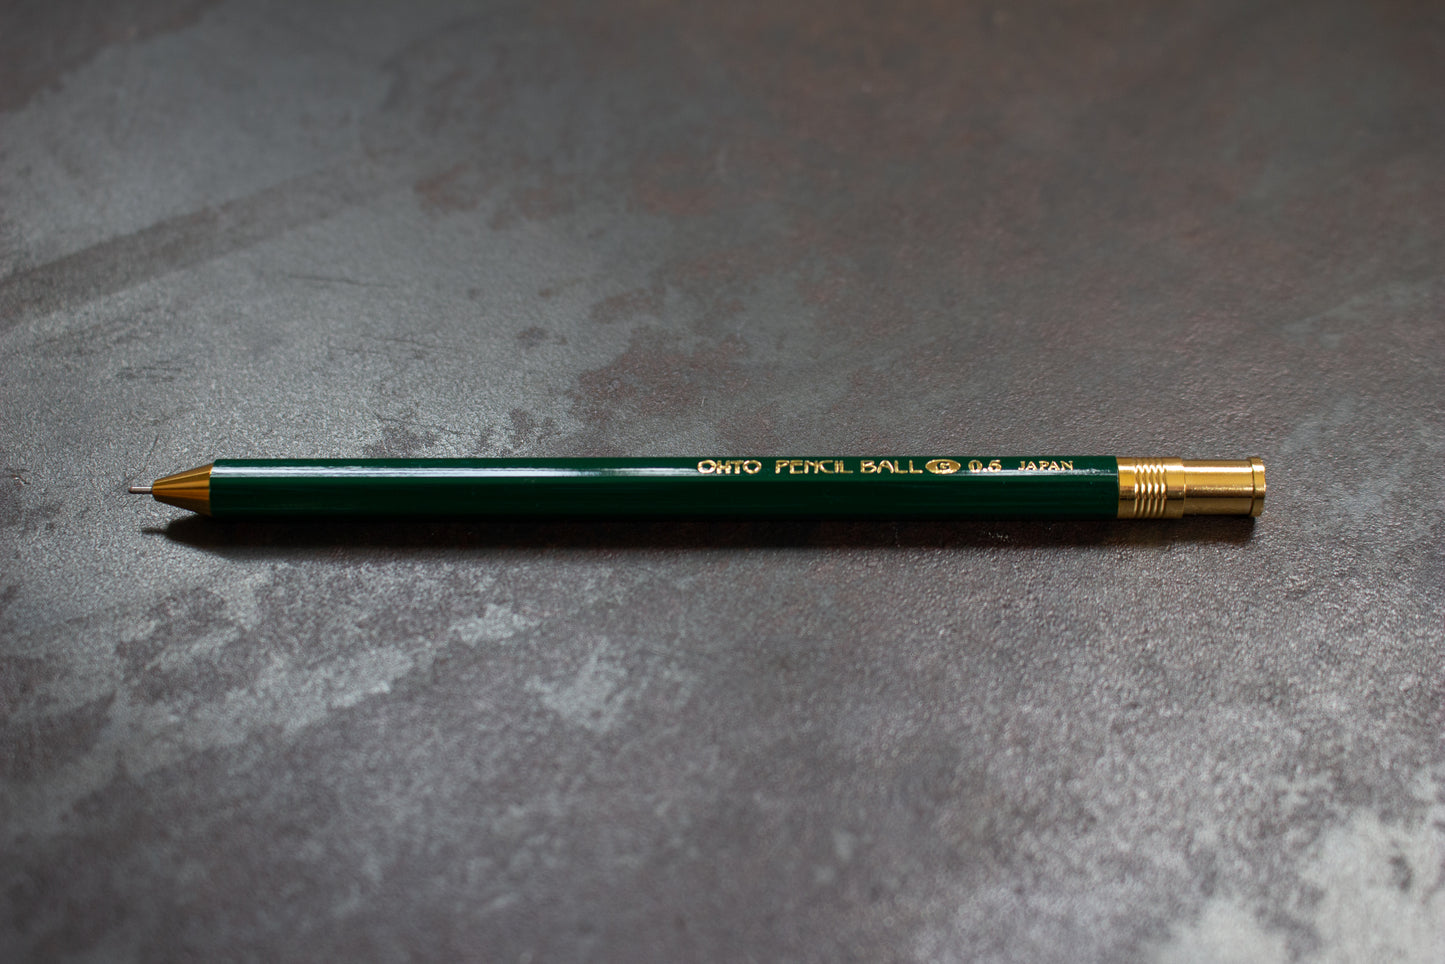 OHTO Pencil Ball 0.5mm Gel Pen - Green | Flywheel | Stationery | Tasmania